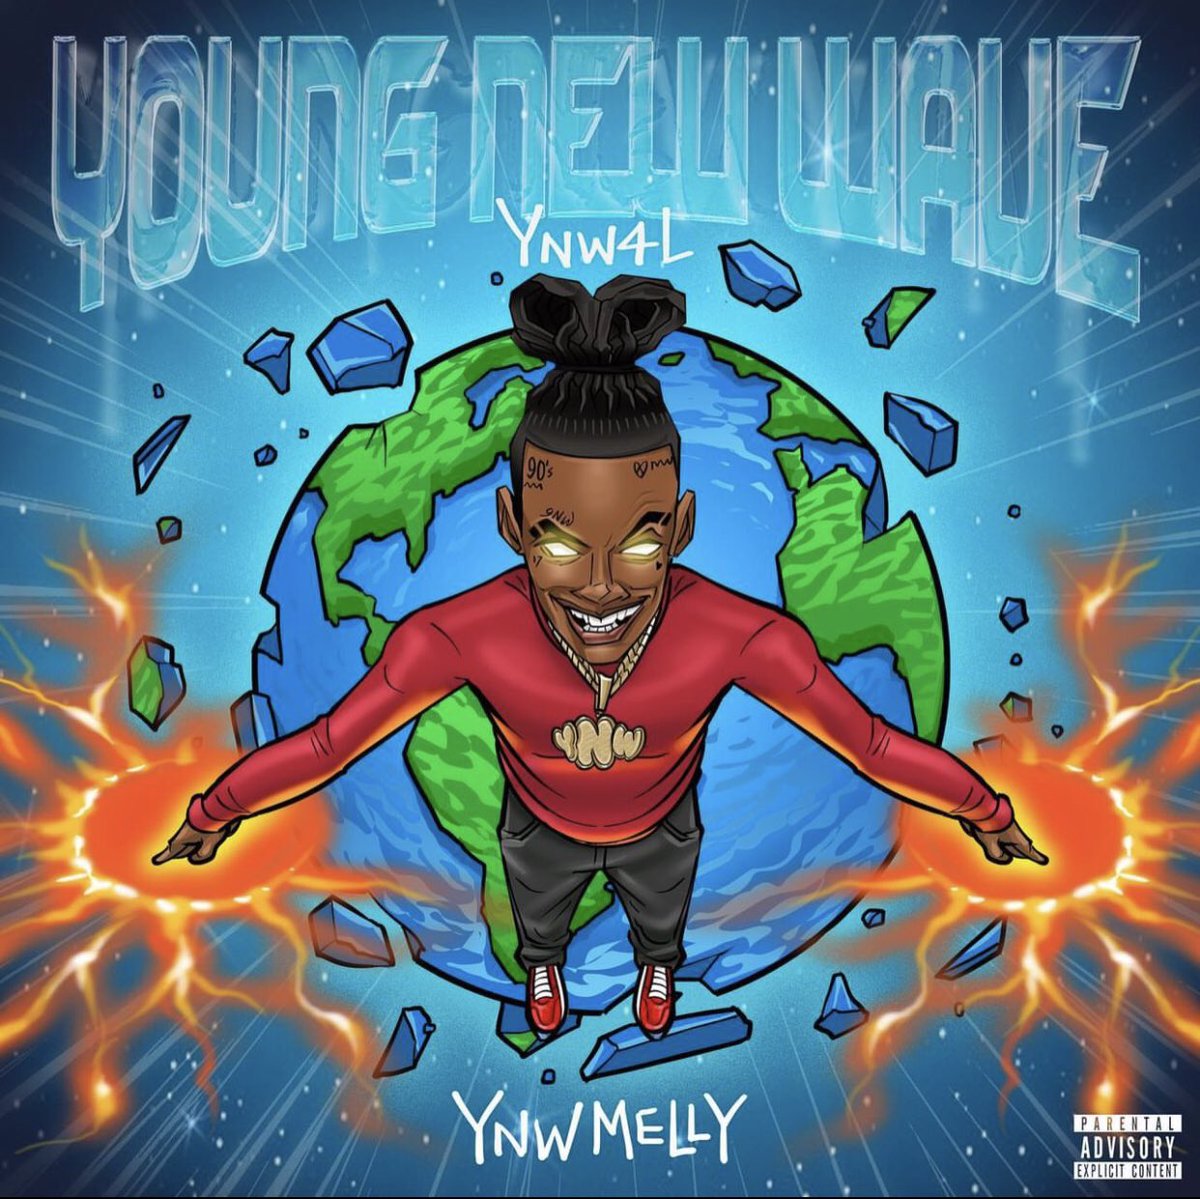 Álbum do YNW Melly sai nessa madrugada às 01:00! 💚🌎🐍

#FreeMelly